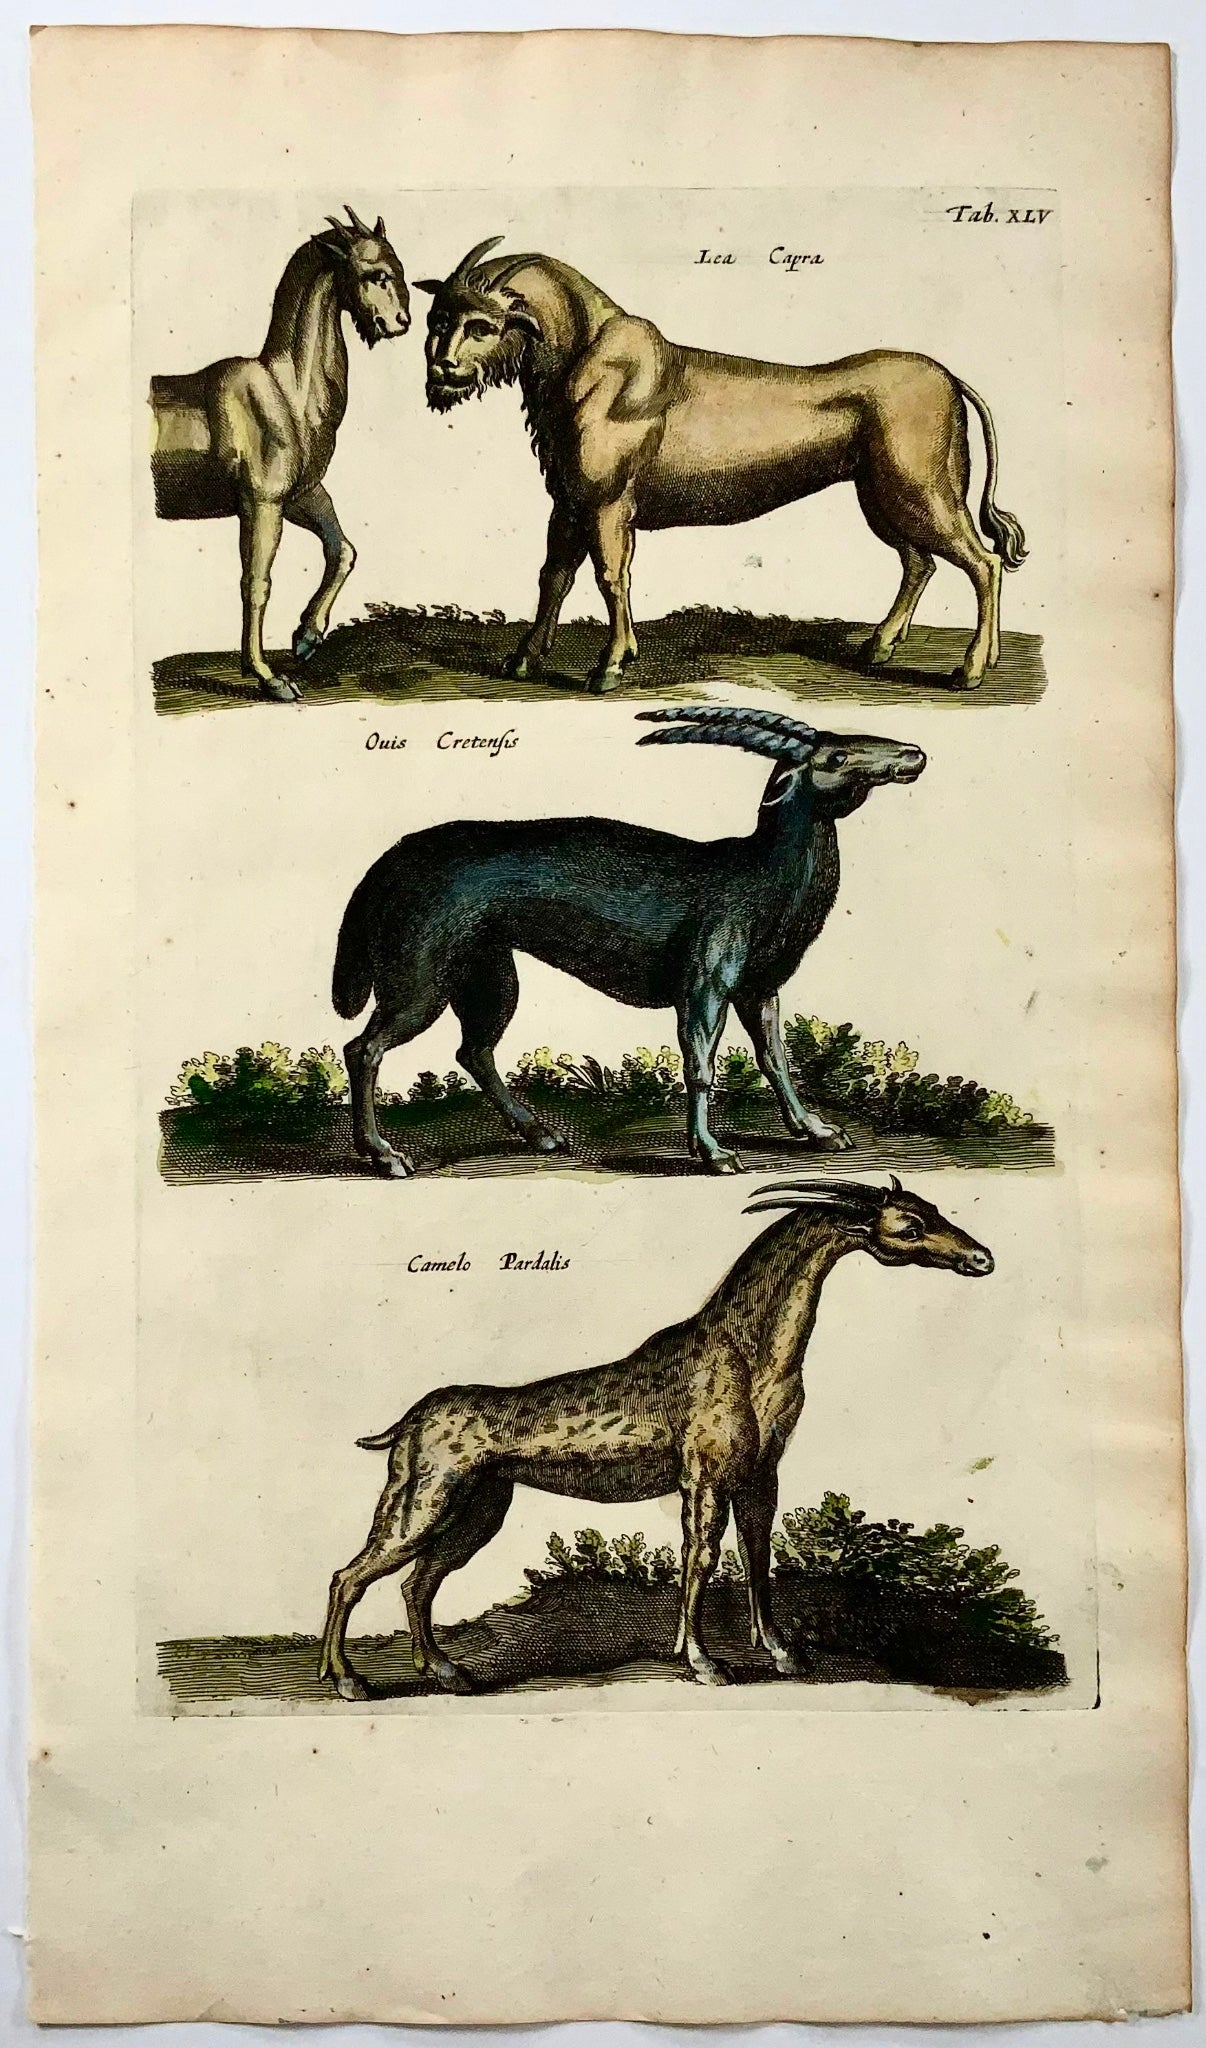 1657 Giraffe, Mythical creatures, Matt Merian, folio, hand coloured, mammals